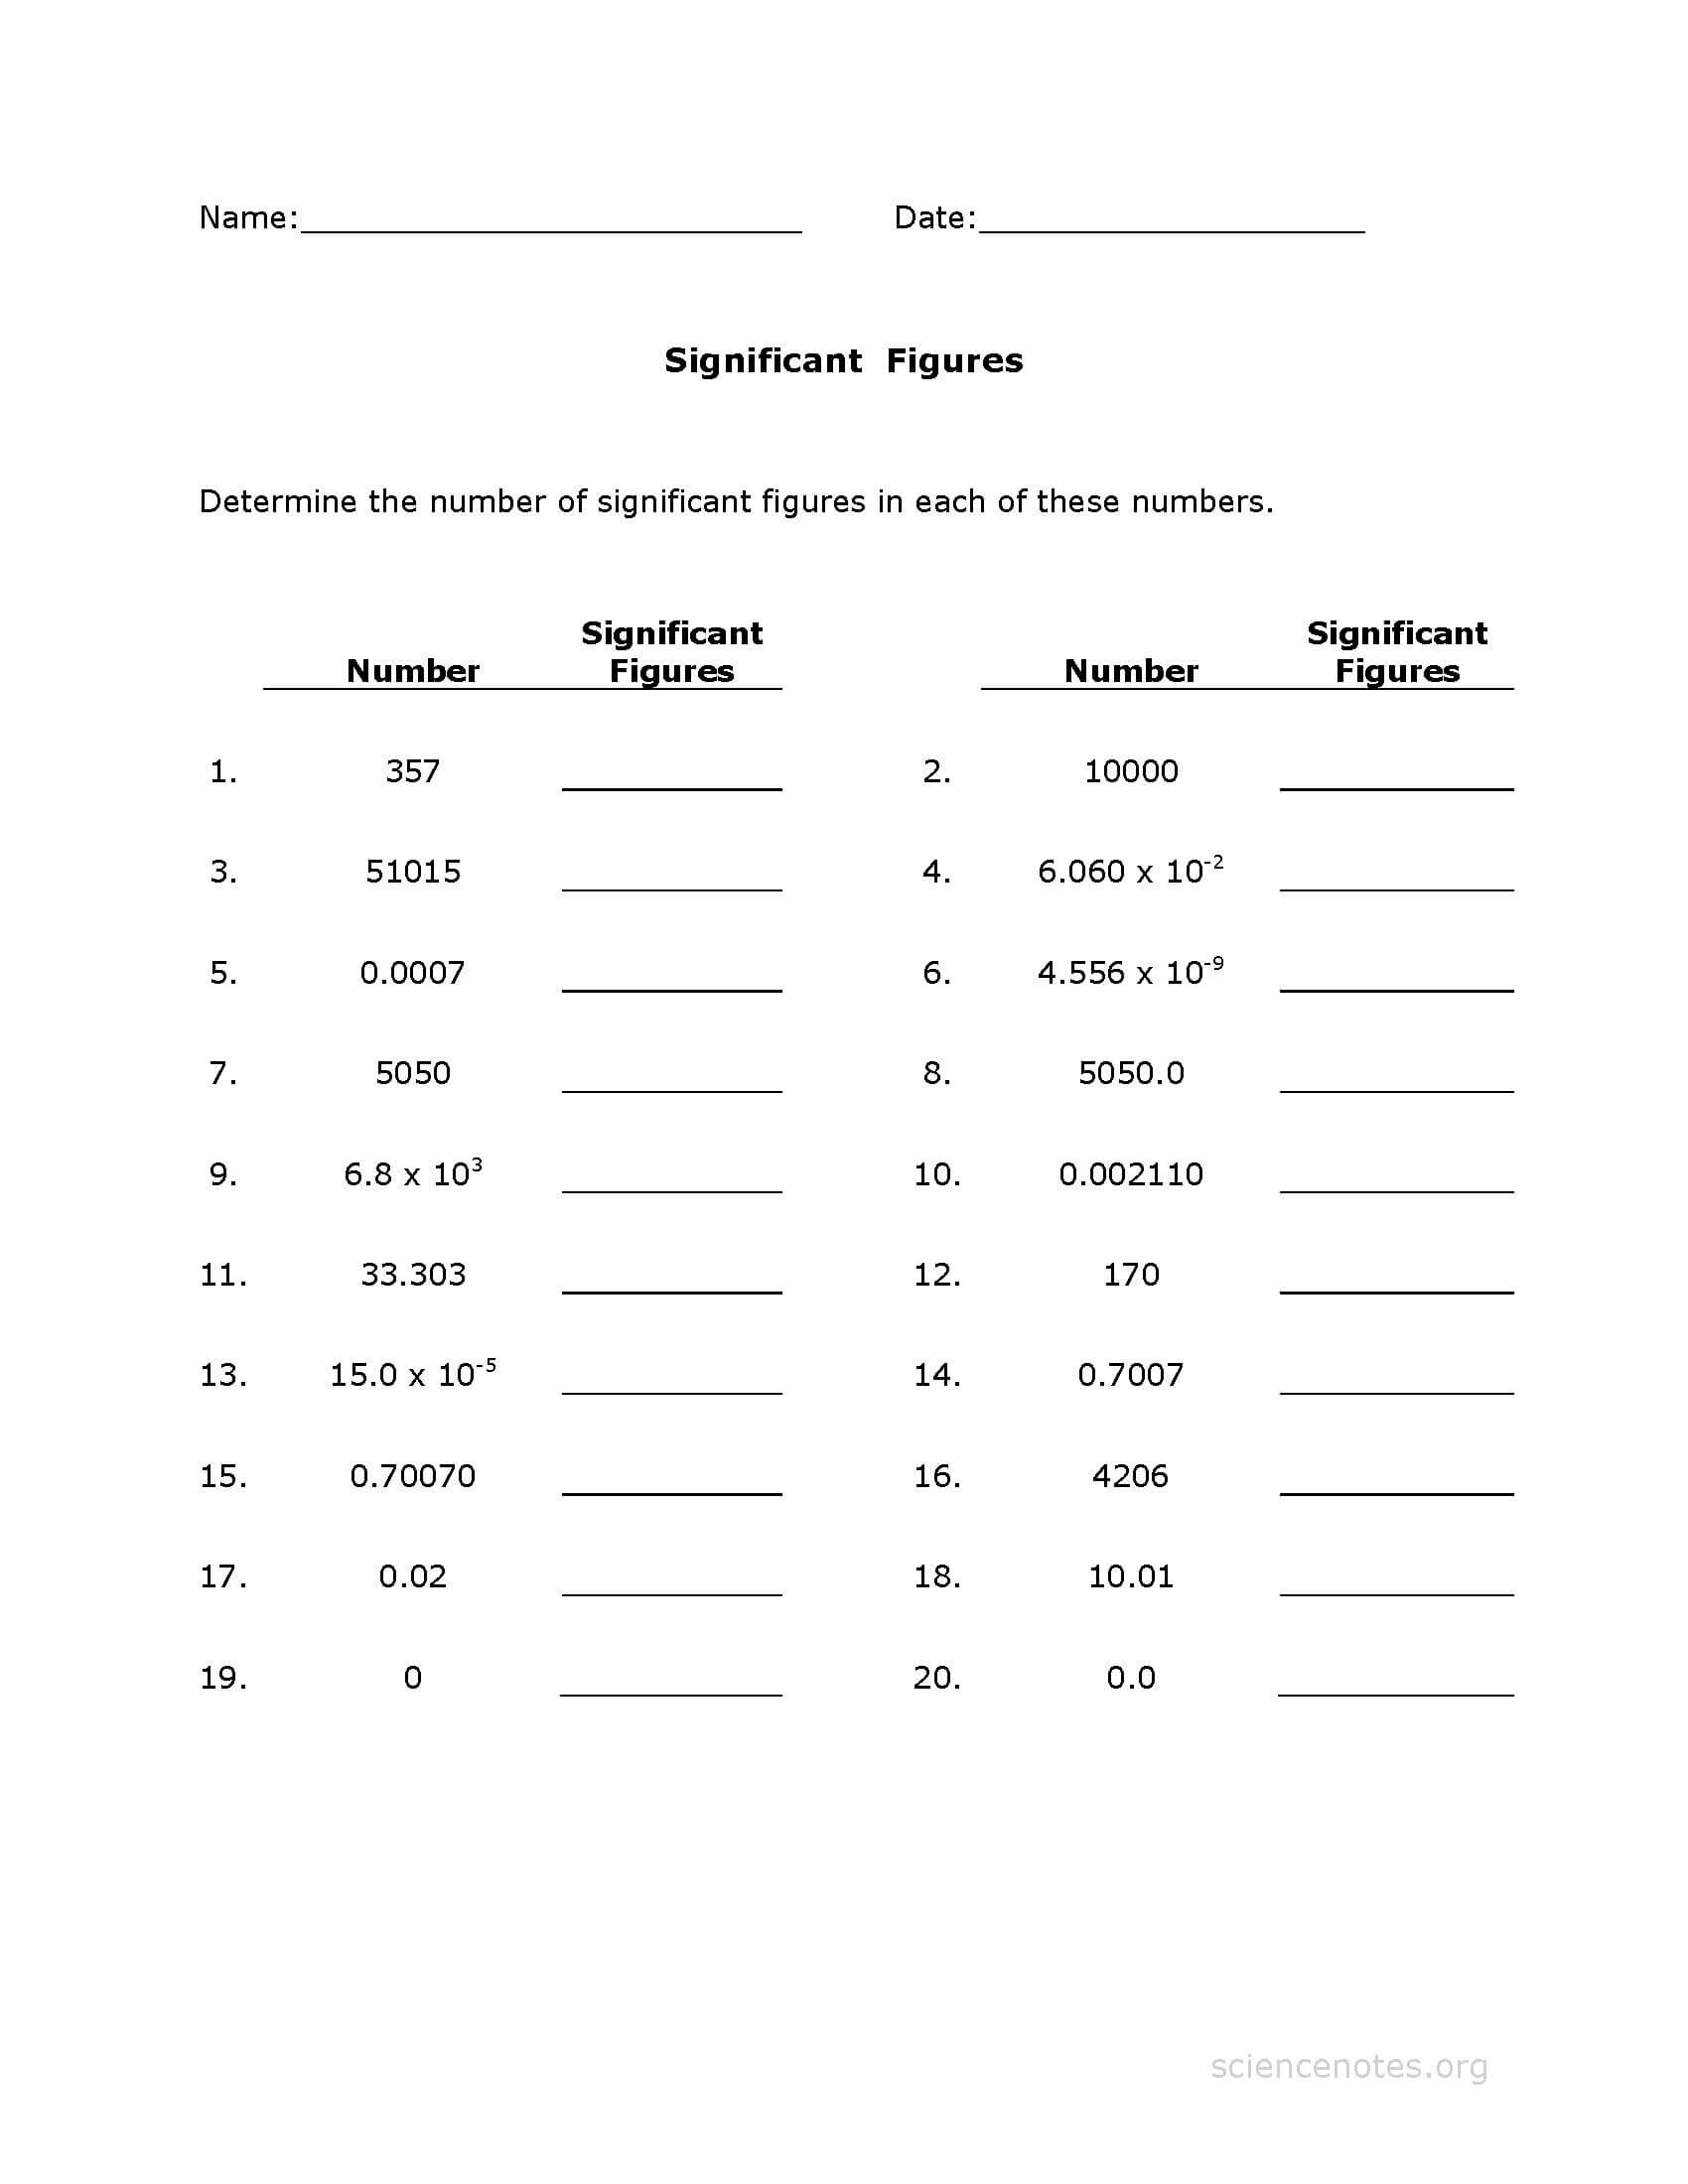 Scientific Notation Worksheet Chemistry Significant Figures Worksheet